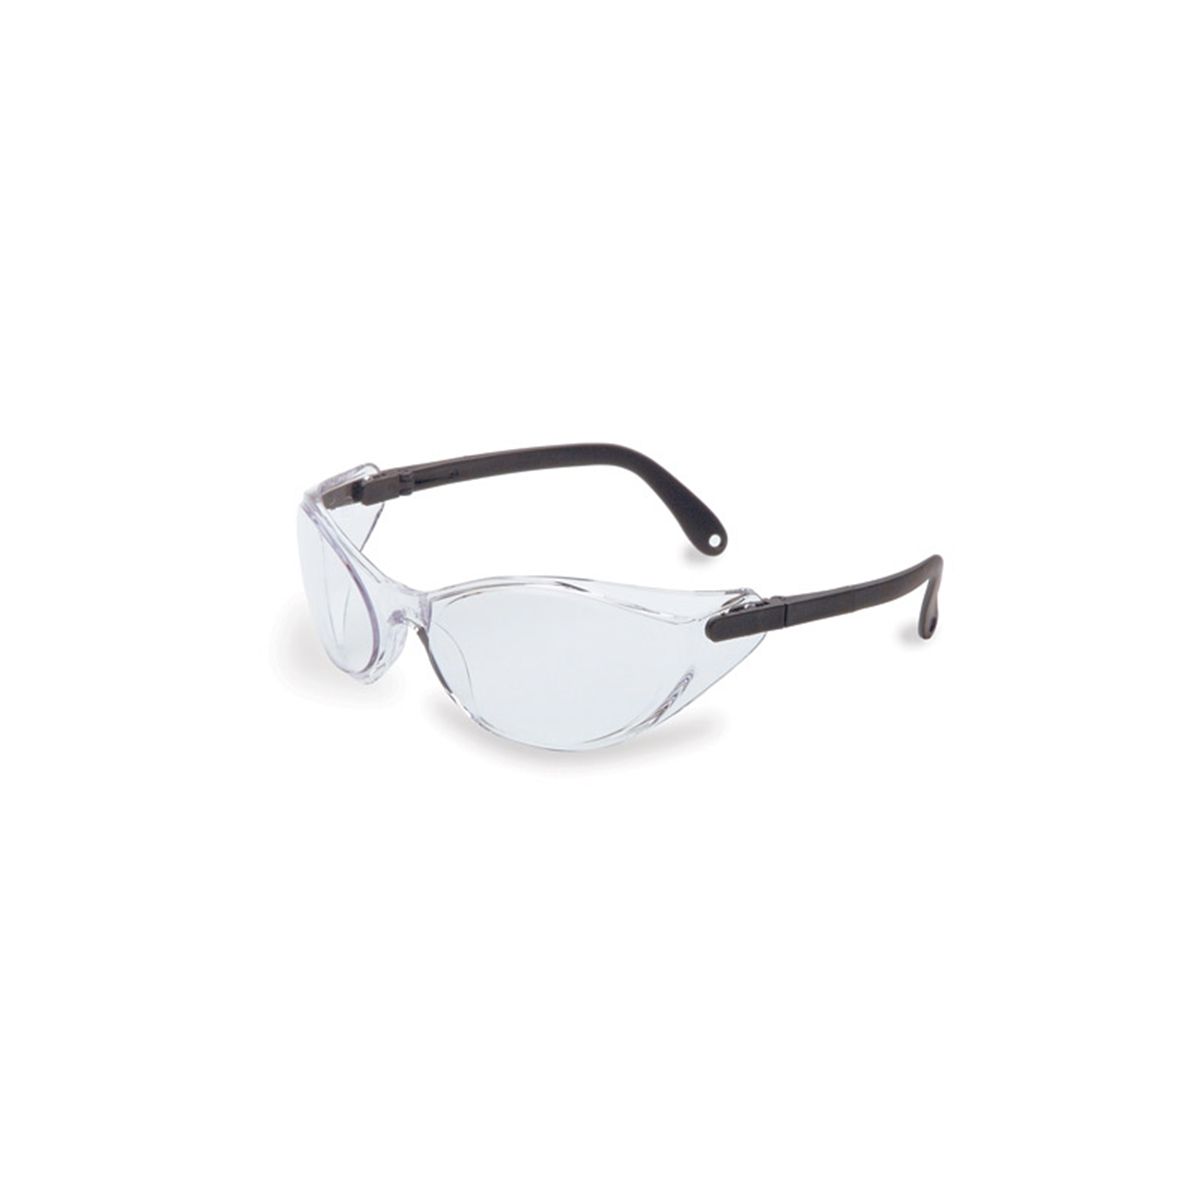 Safety Glasses - Bandido - Black - Clear Lens